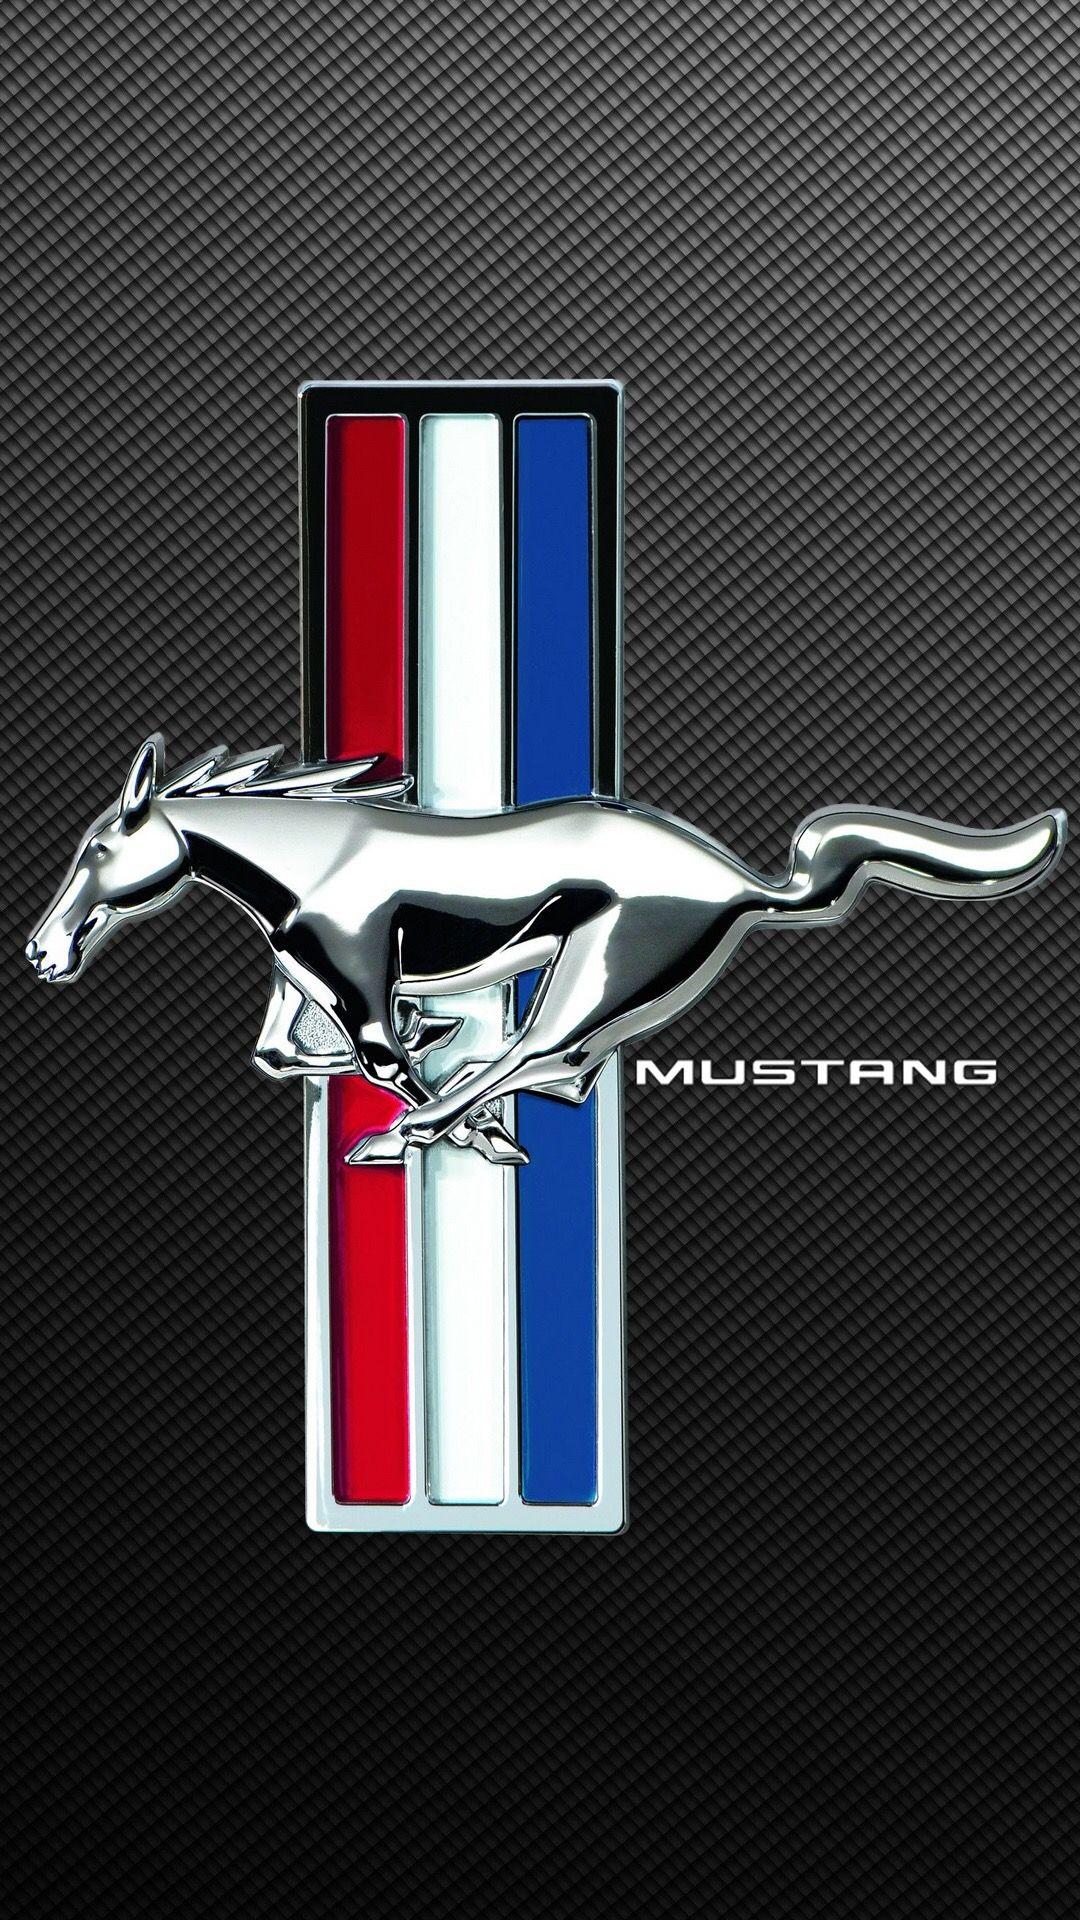 Mustang Logo Mobile Wallpapers - Wallpaper Cave